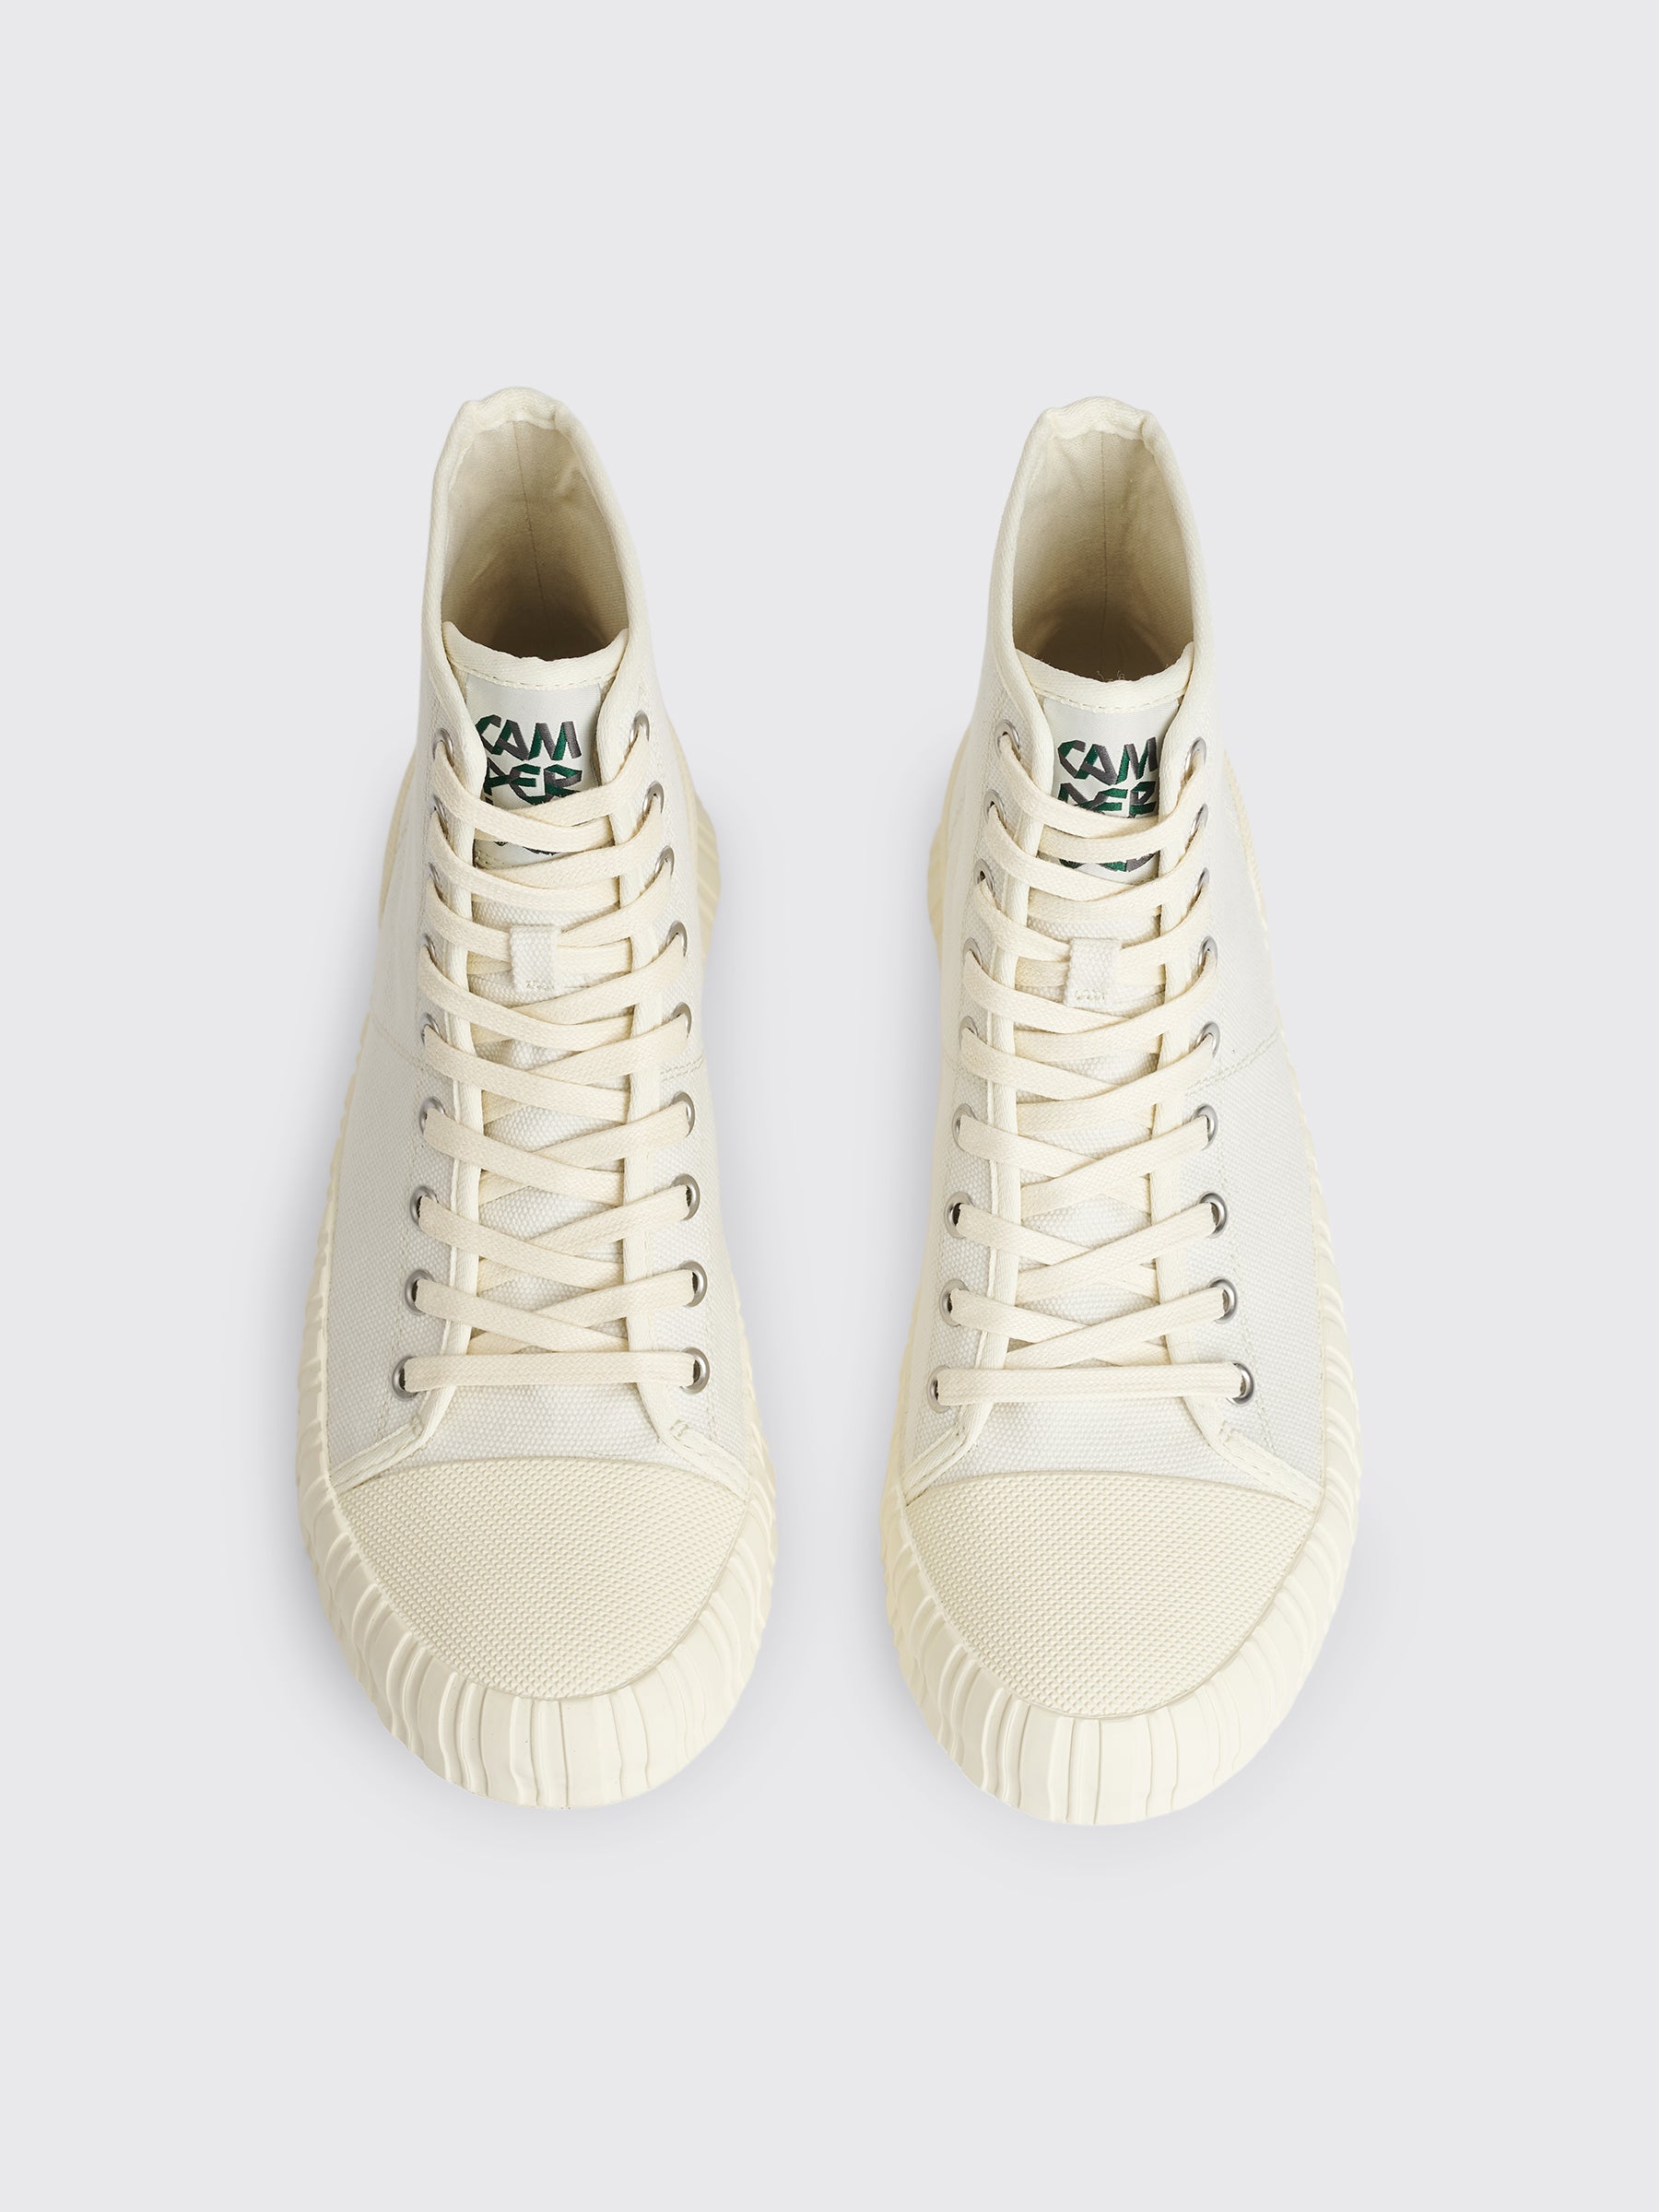 CamperLab Roz Hi-Top Sneakers White